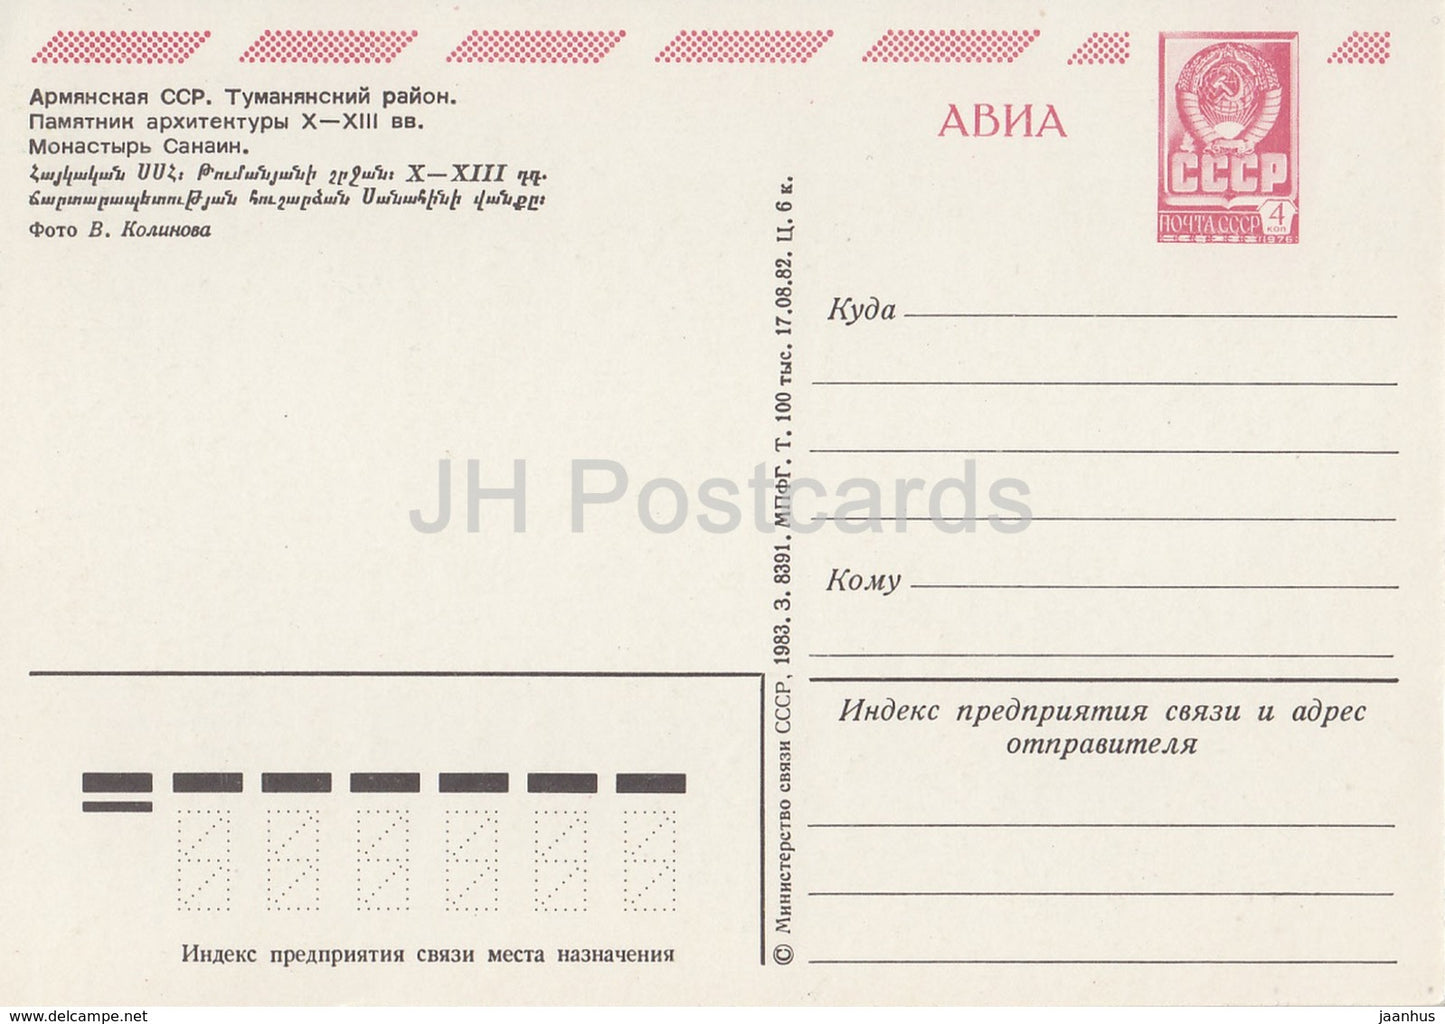 Tumanyan Region - Sanahin monastery - Architectural monument - AVIA - postal stationery - 1983 - Armenia USSR -  unused